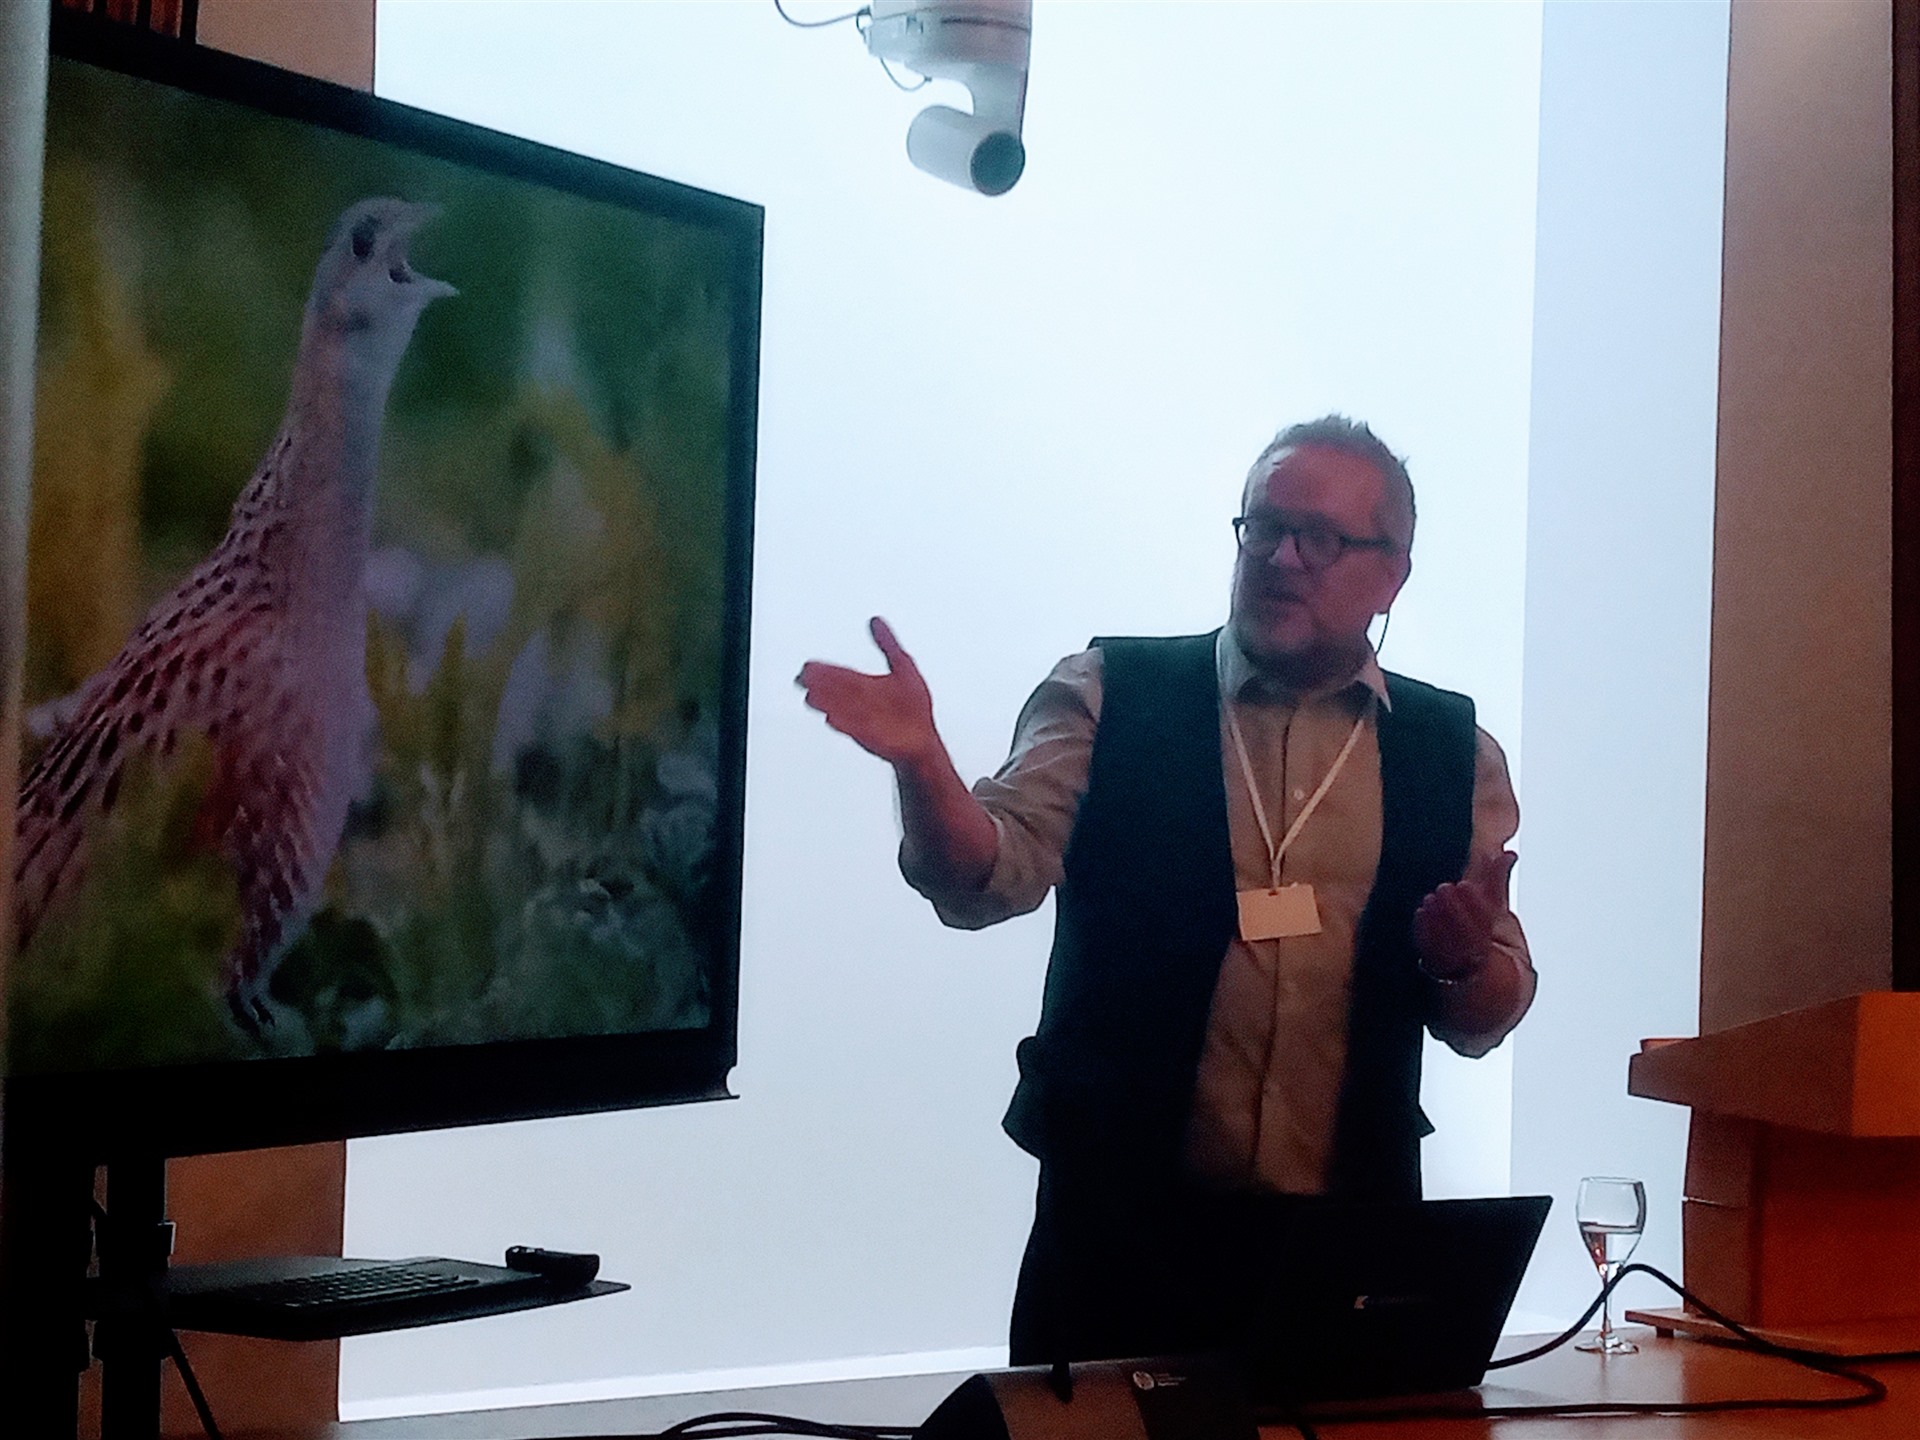  RSPB Scotland's Paul Walton is delivering a presentation beside a screen showing a Corncrake.